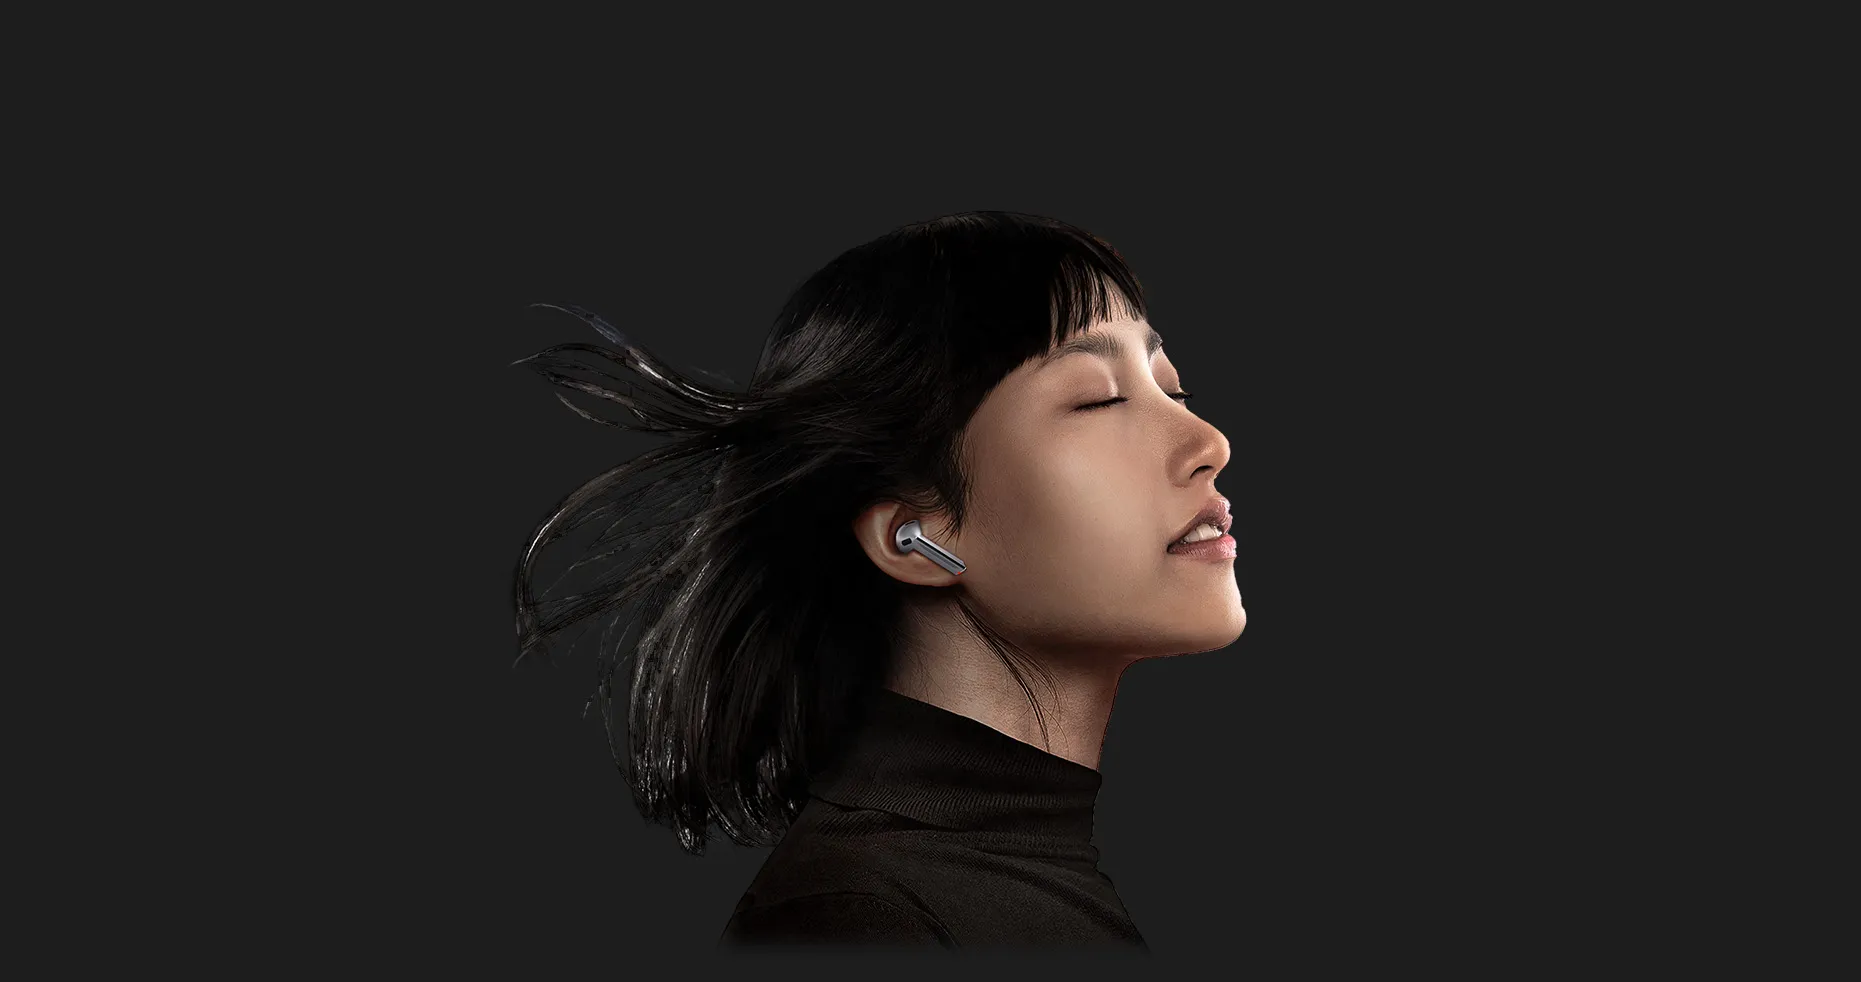 Навушники Samsung